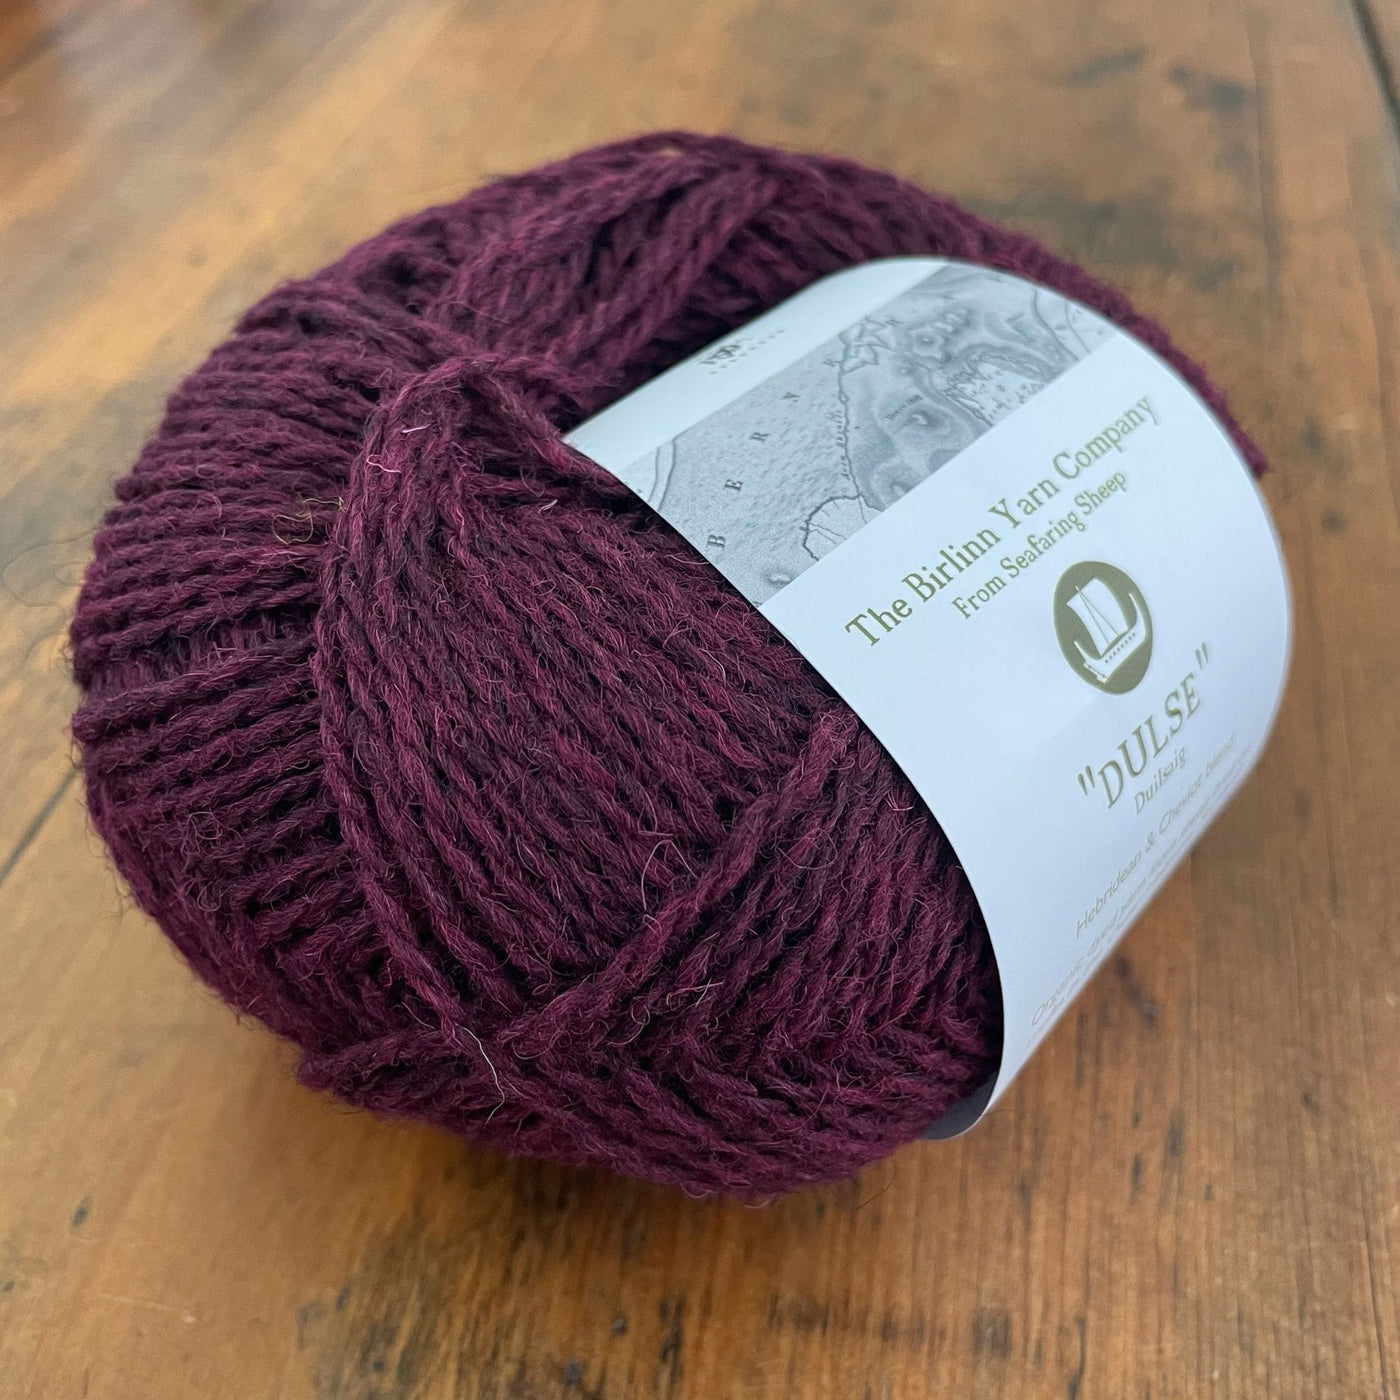 Birlinn Yarn Company Hebridean 4ply yarn shown in Dulse (Dark Pink)